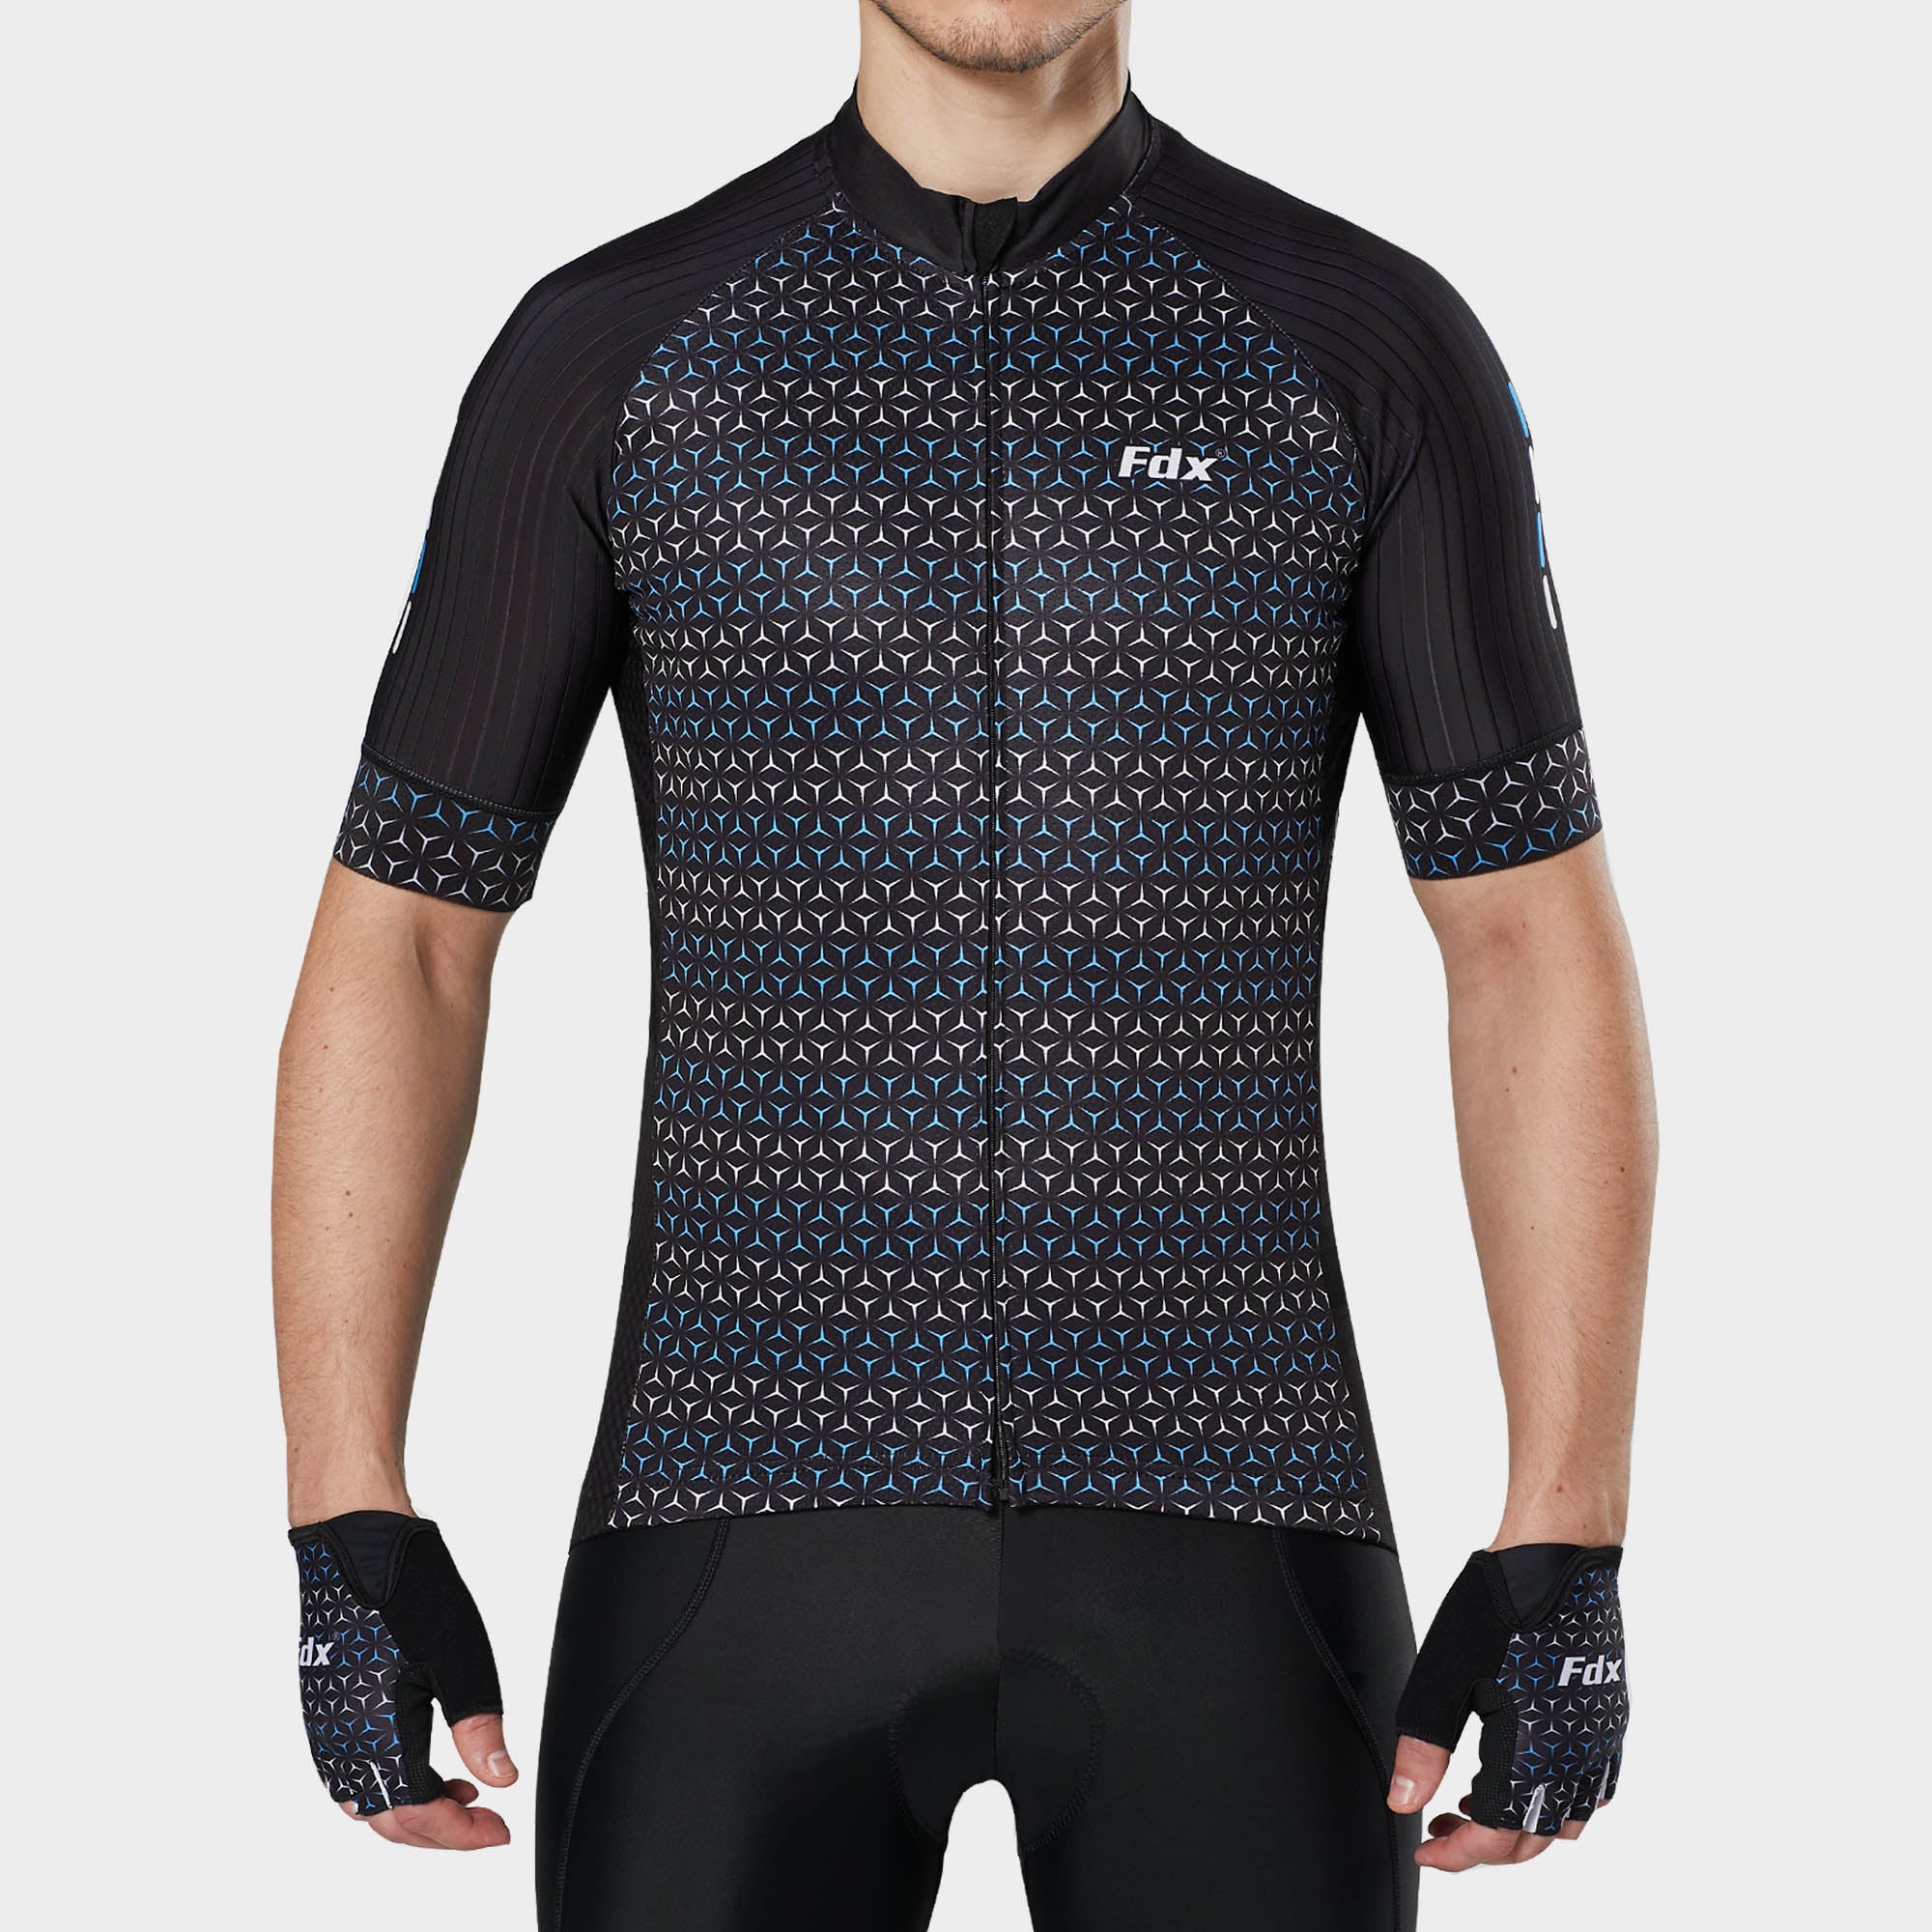 Fdx Mens Black Short Sleeve Cycling Jersey for Summer Best Road Bike Wear Top Light Weight, Full Zipper, Pockets & Hi-viz Reflectors - Vega